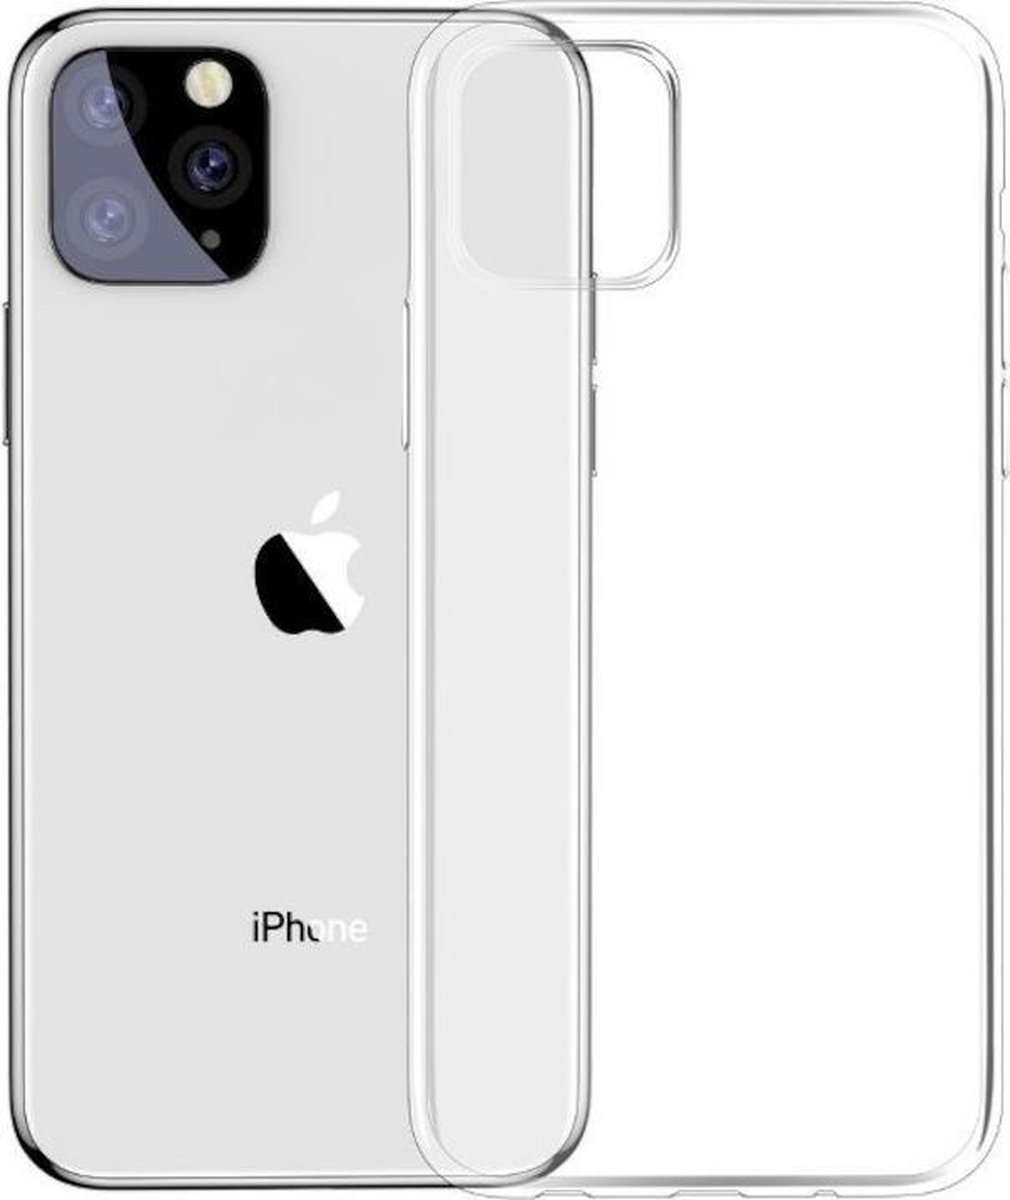 Beschermende softcase iPhone 11 Pro - transparant